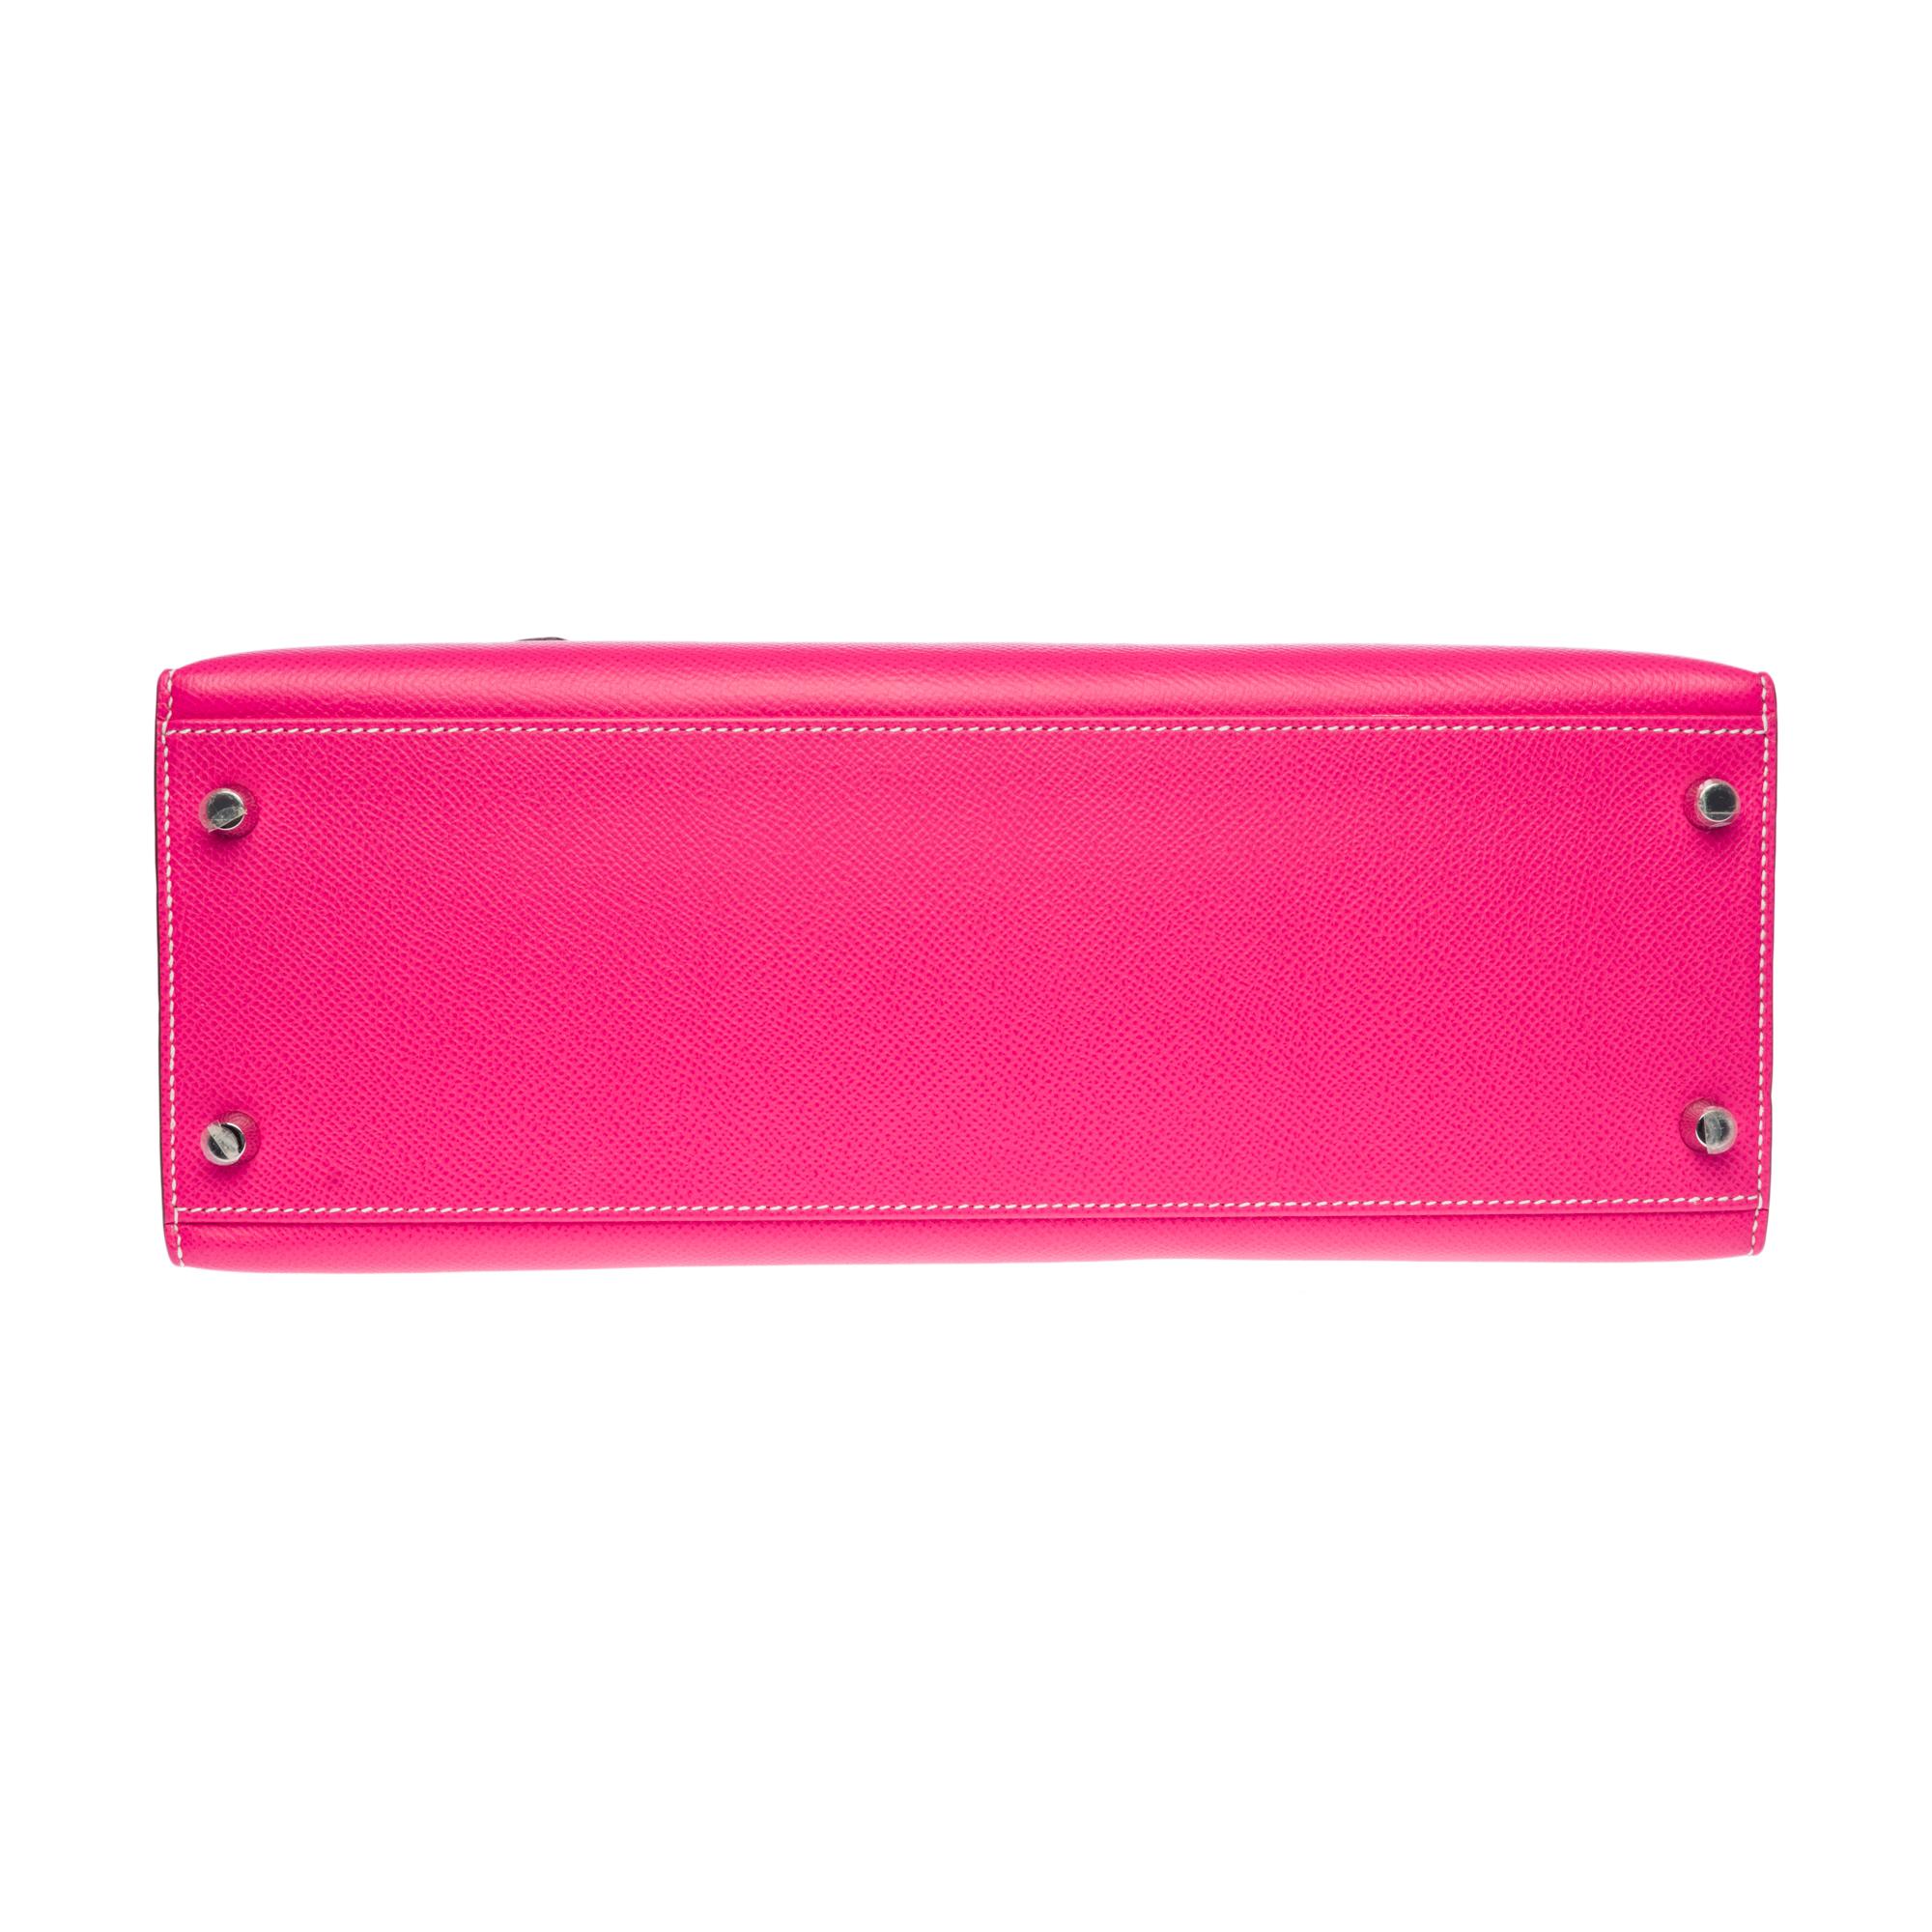 Hermès Kelly 32 sellier handbag strap in Rose lipstick epsom leather, SHW 5